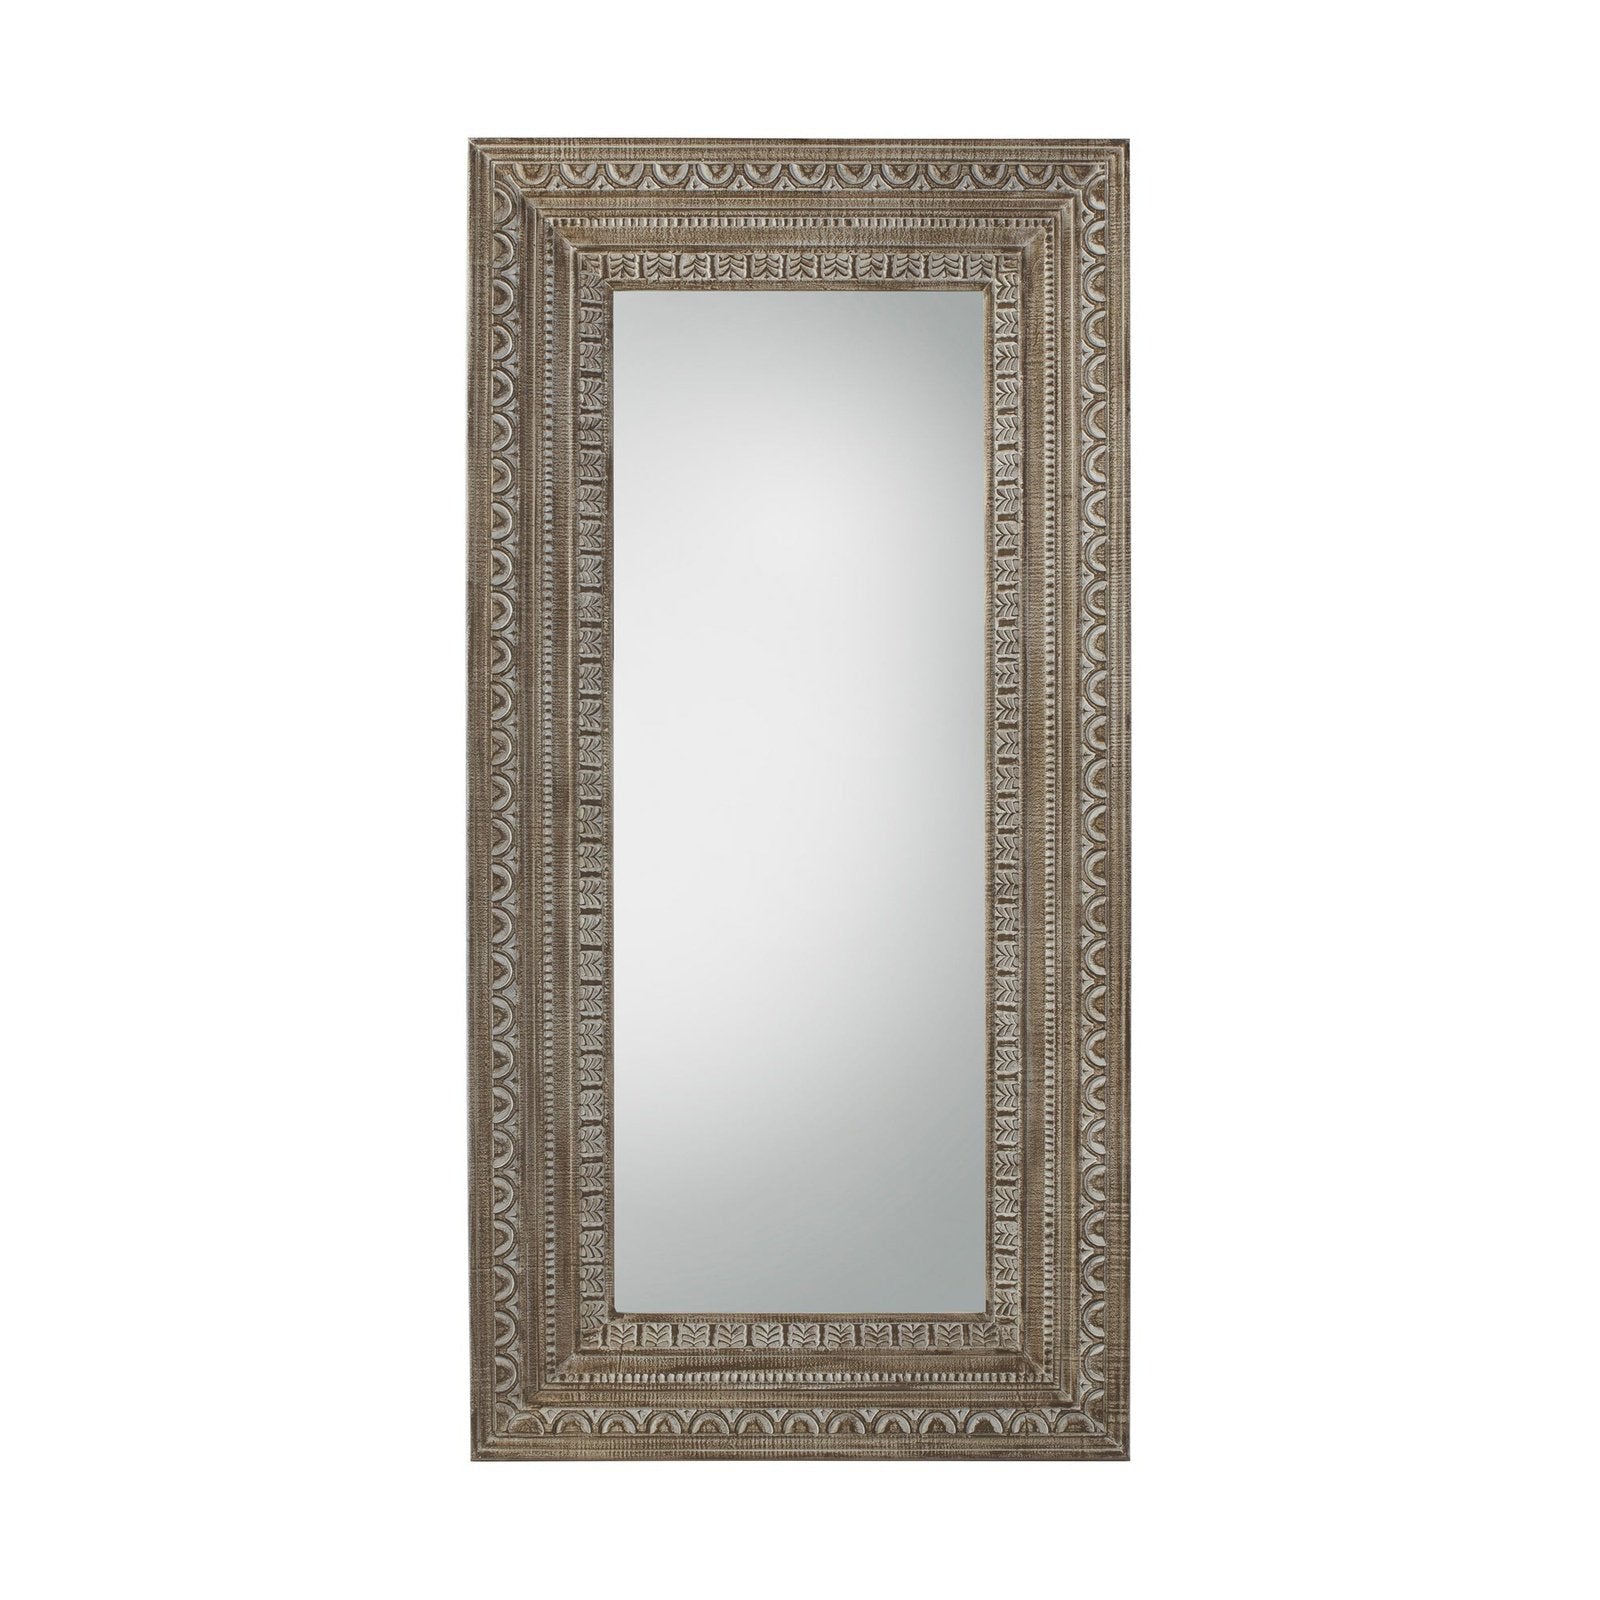 Cyprus Large Leaner Mirror 90x180cm - Decorative Wooden Frame - Washed Finish - Portrait & Landscape Orinetation